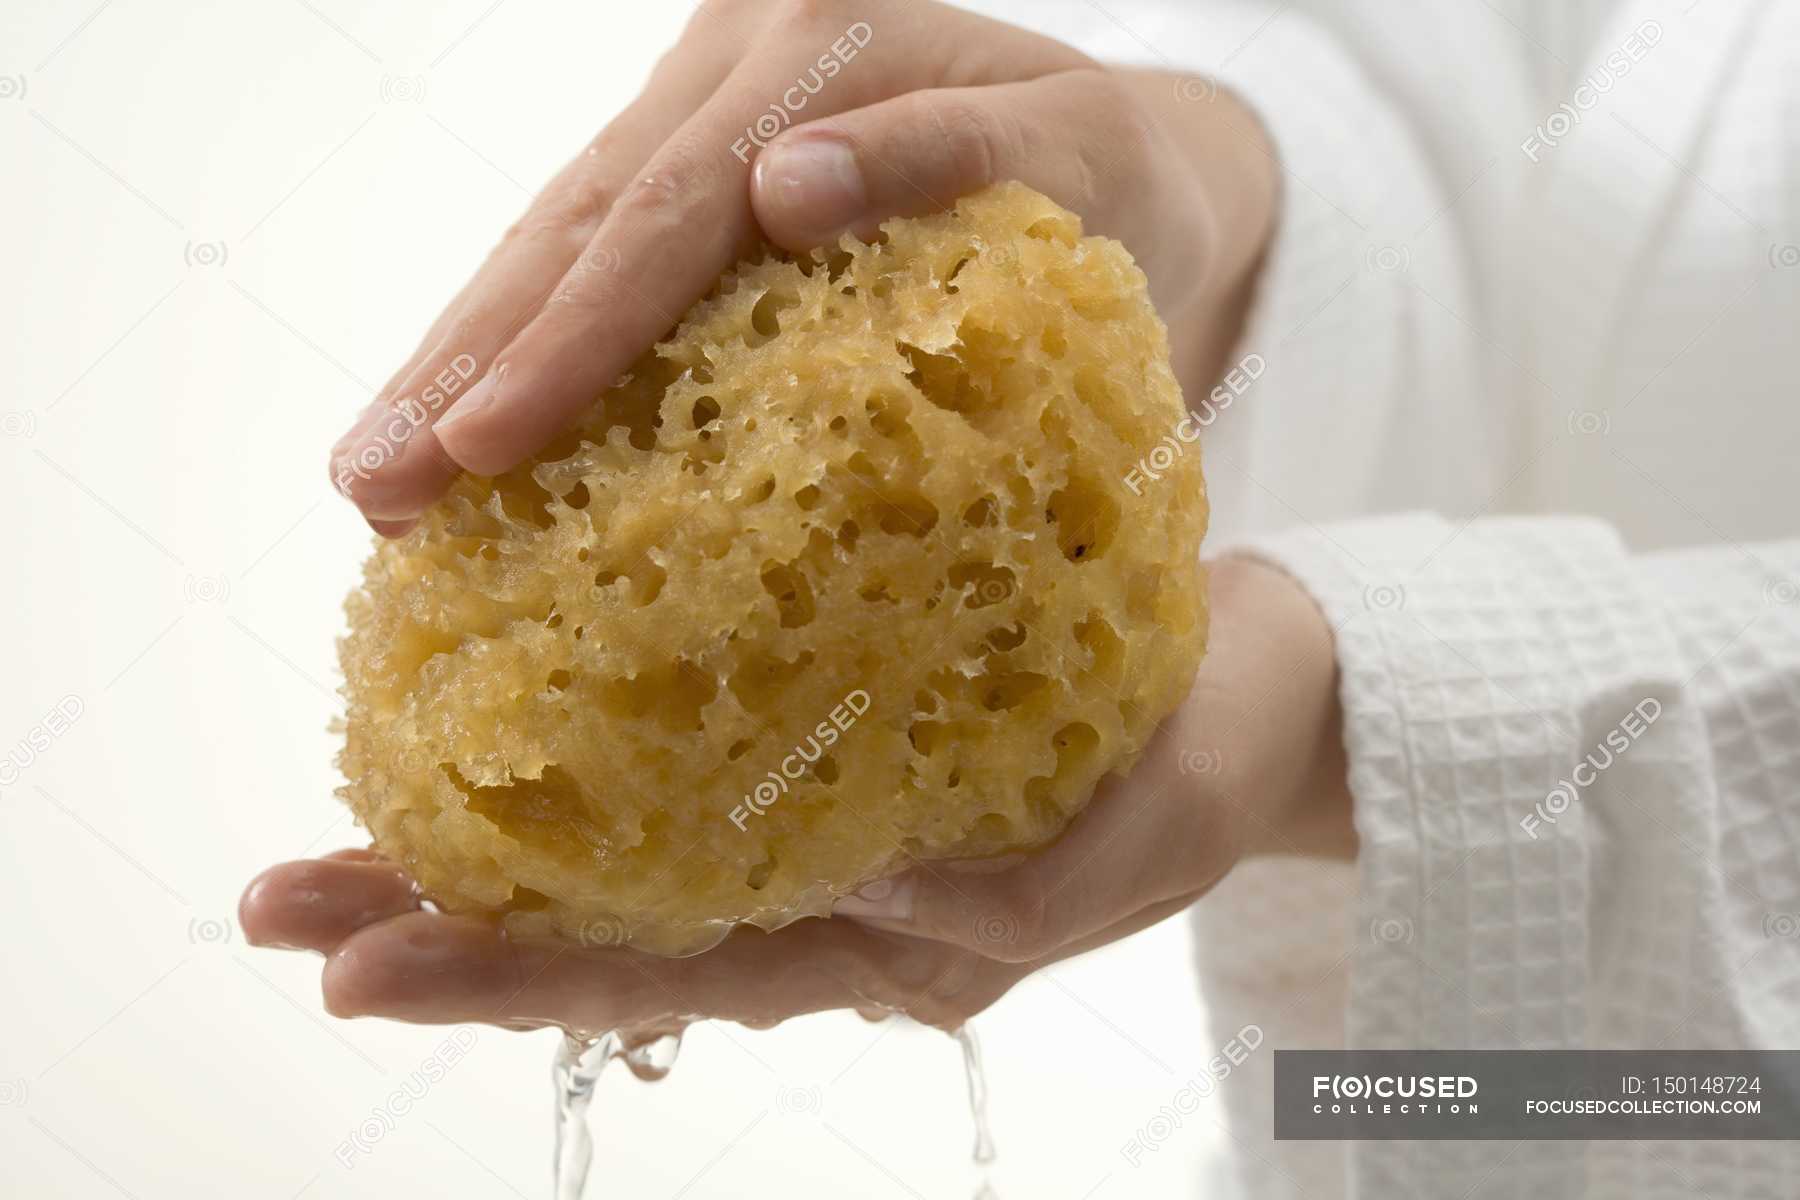 wet sponge